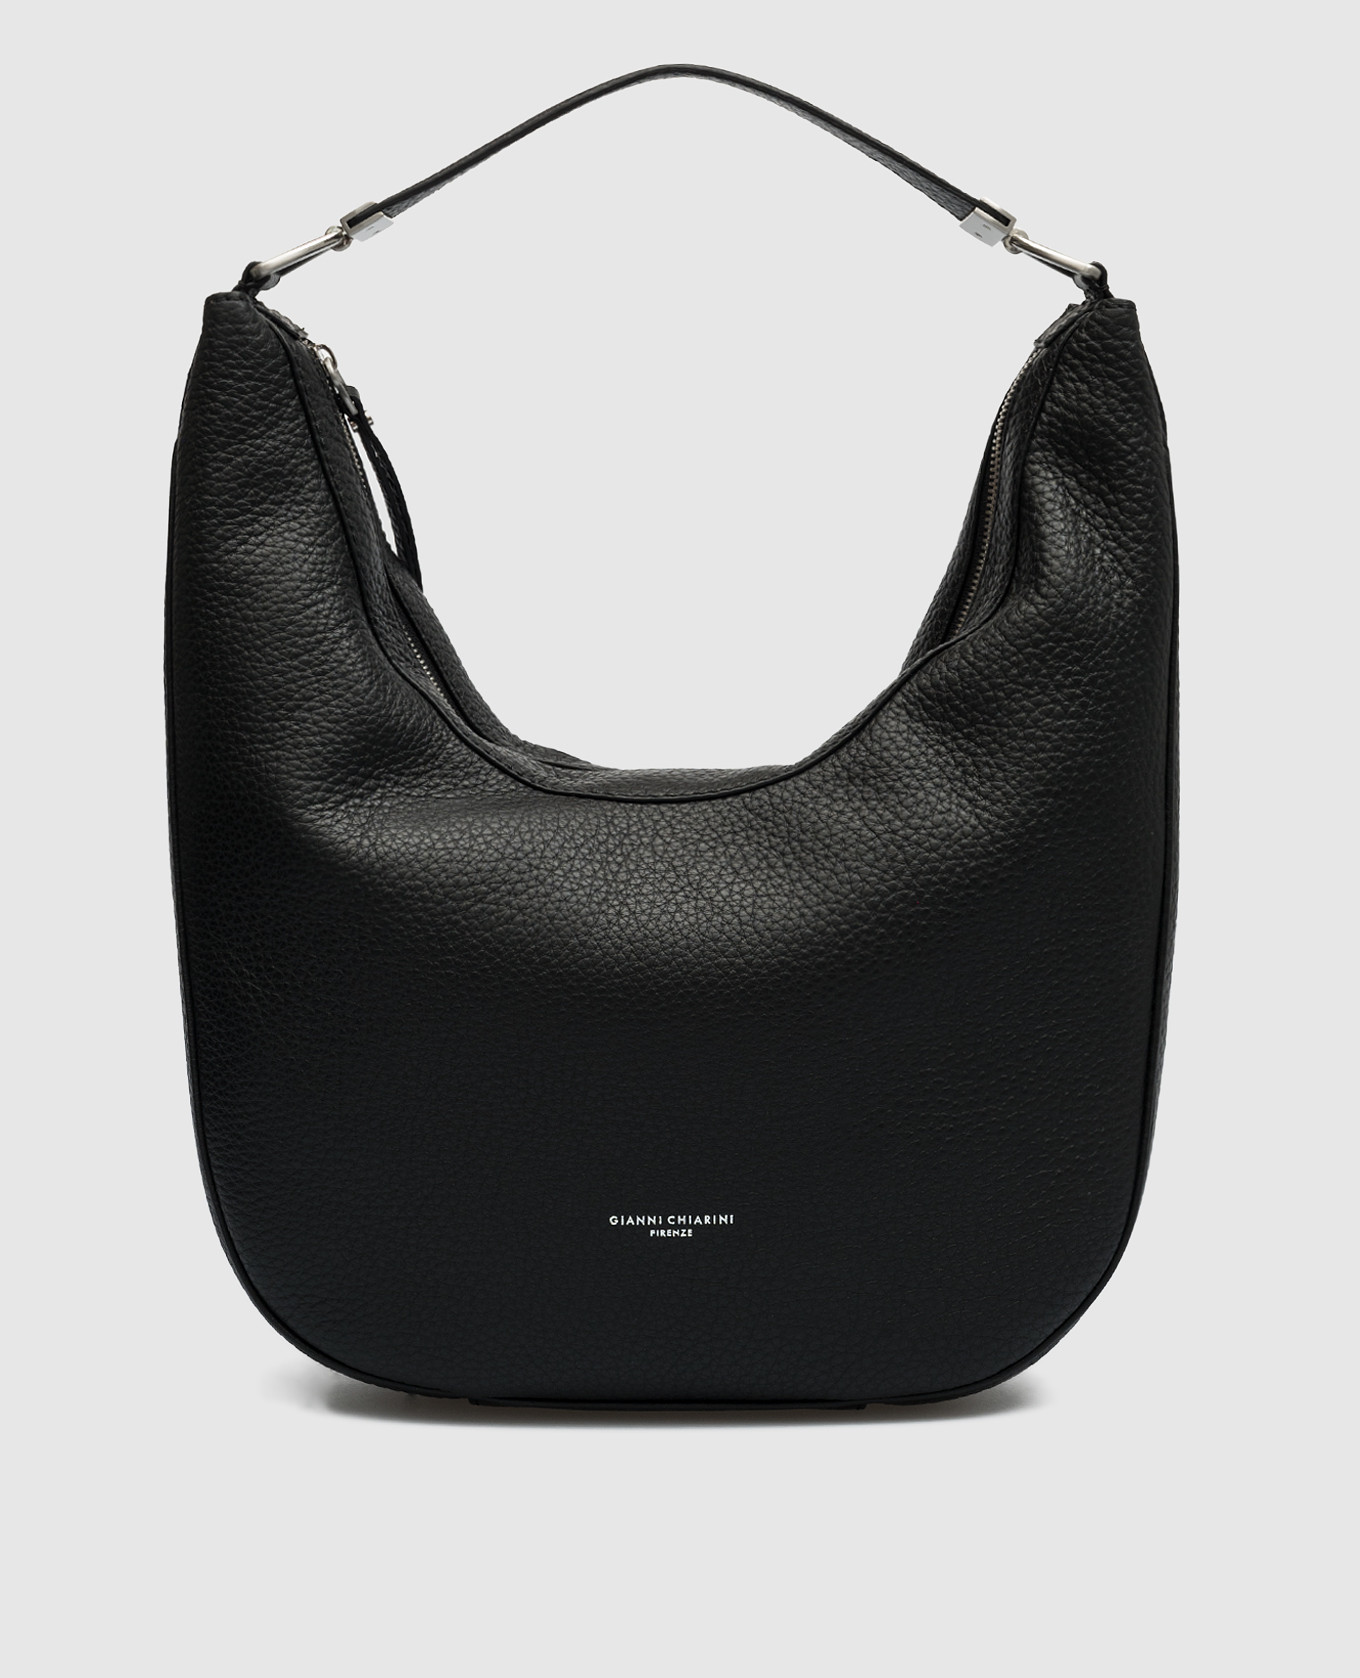 Costanza black leather hobo bag